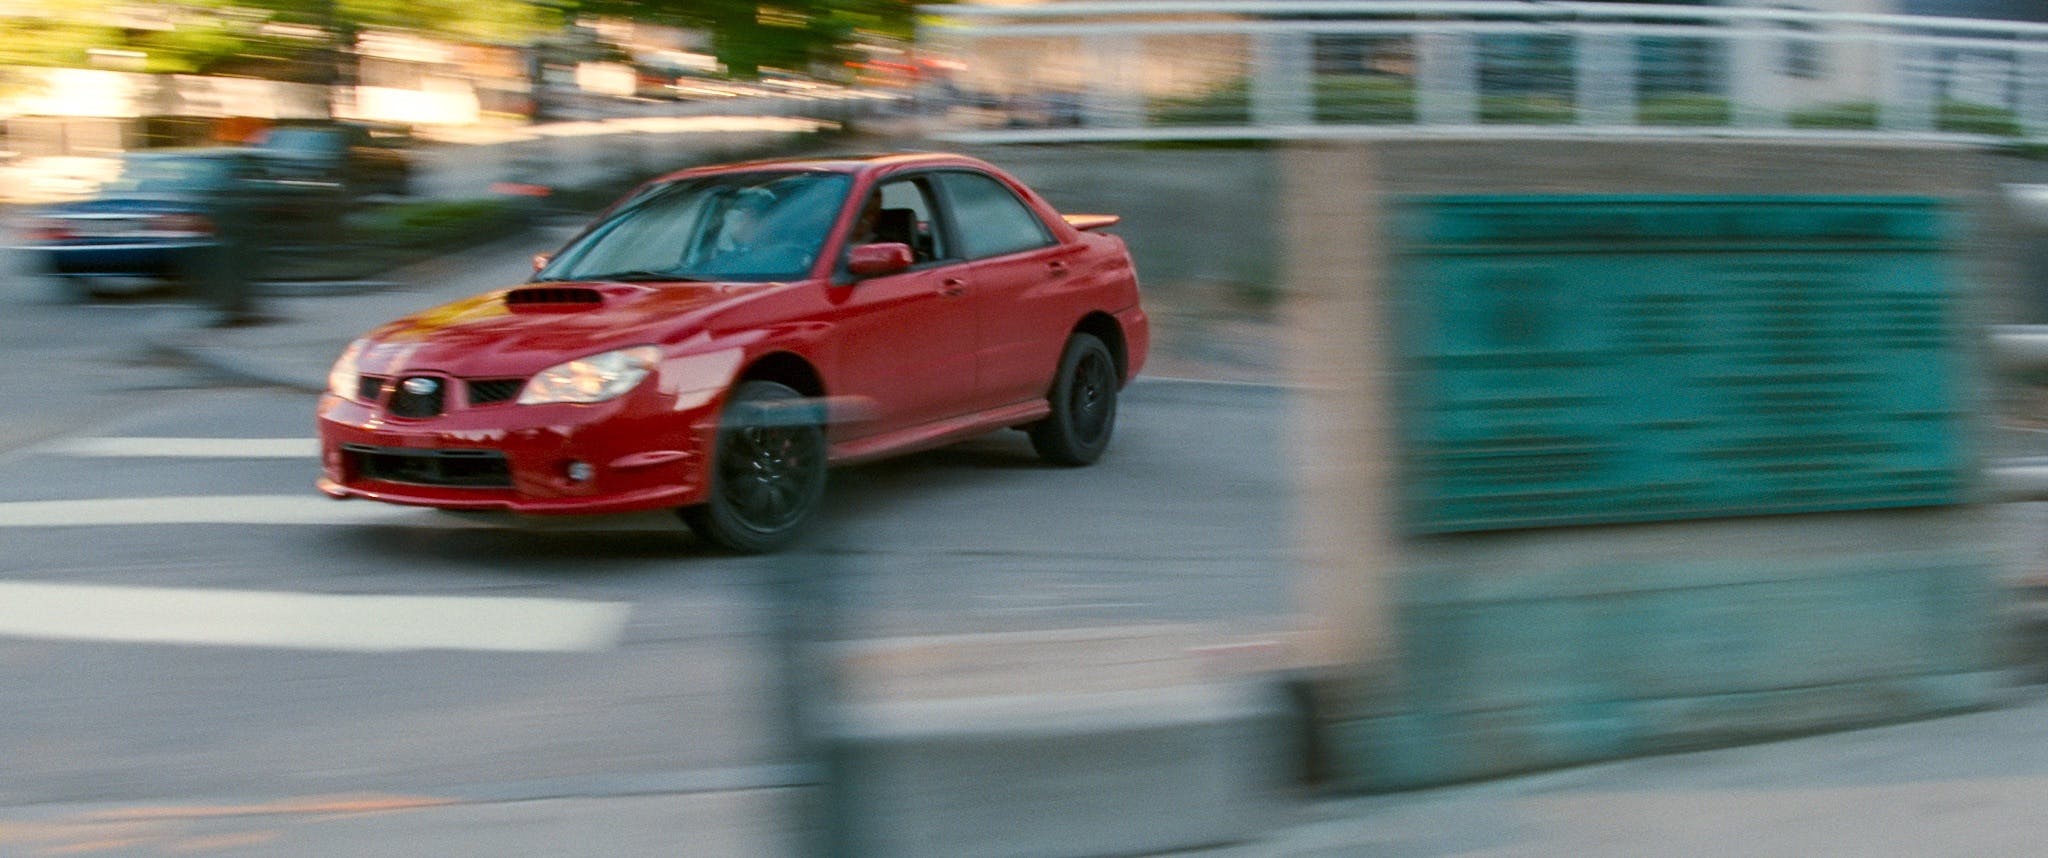 Baby Driver film impreza drift action